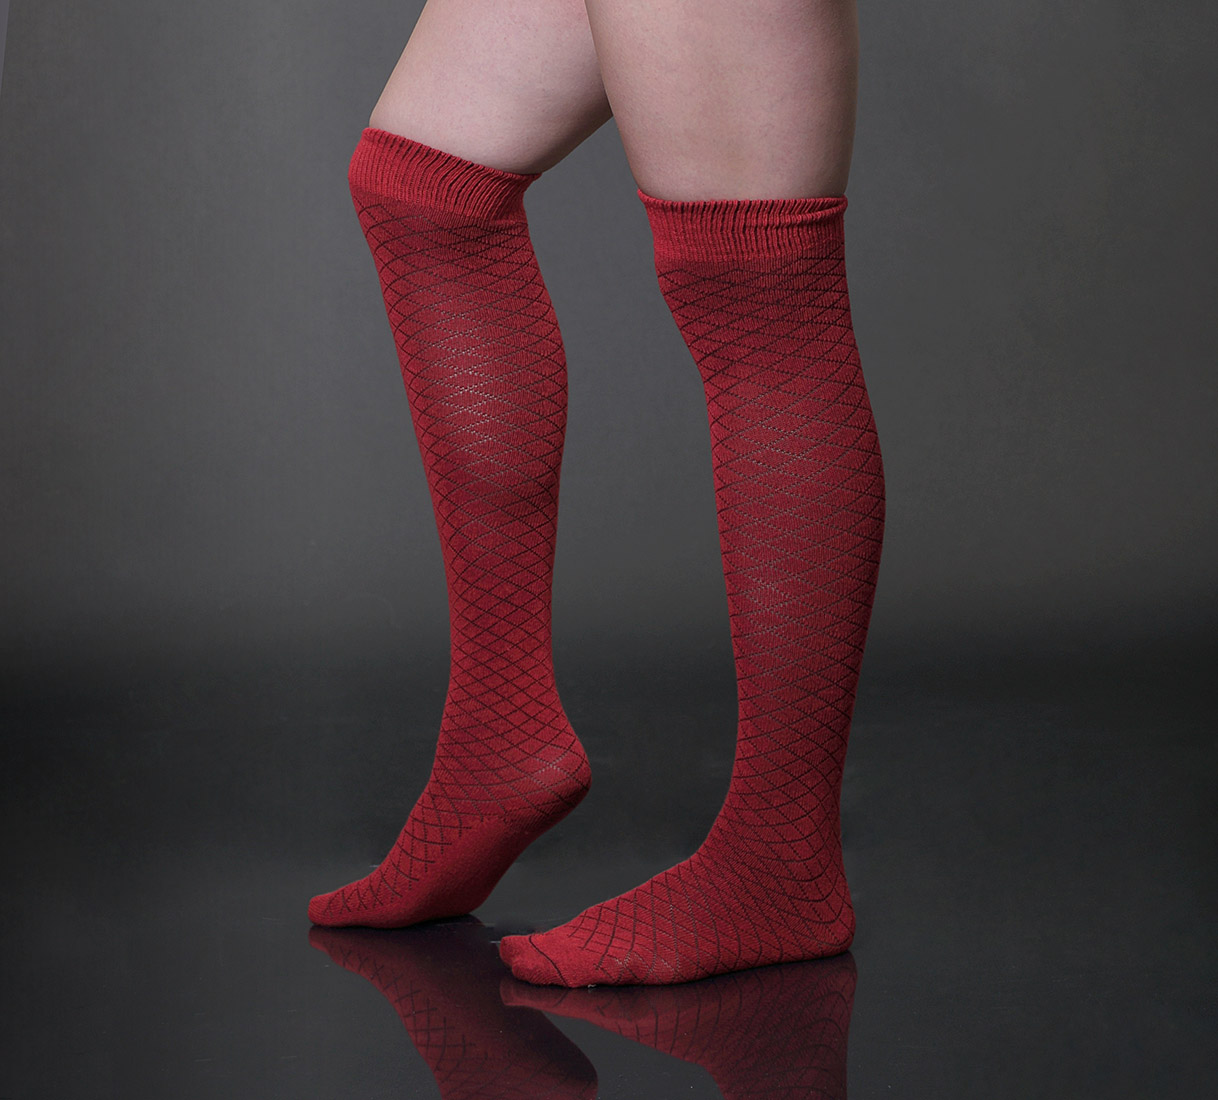 Cherry Red Diamond Pattern Over the Knee socks Patterned Socks Made in USA Socks...